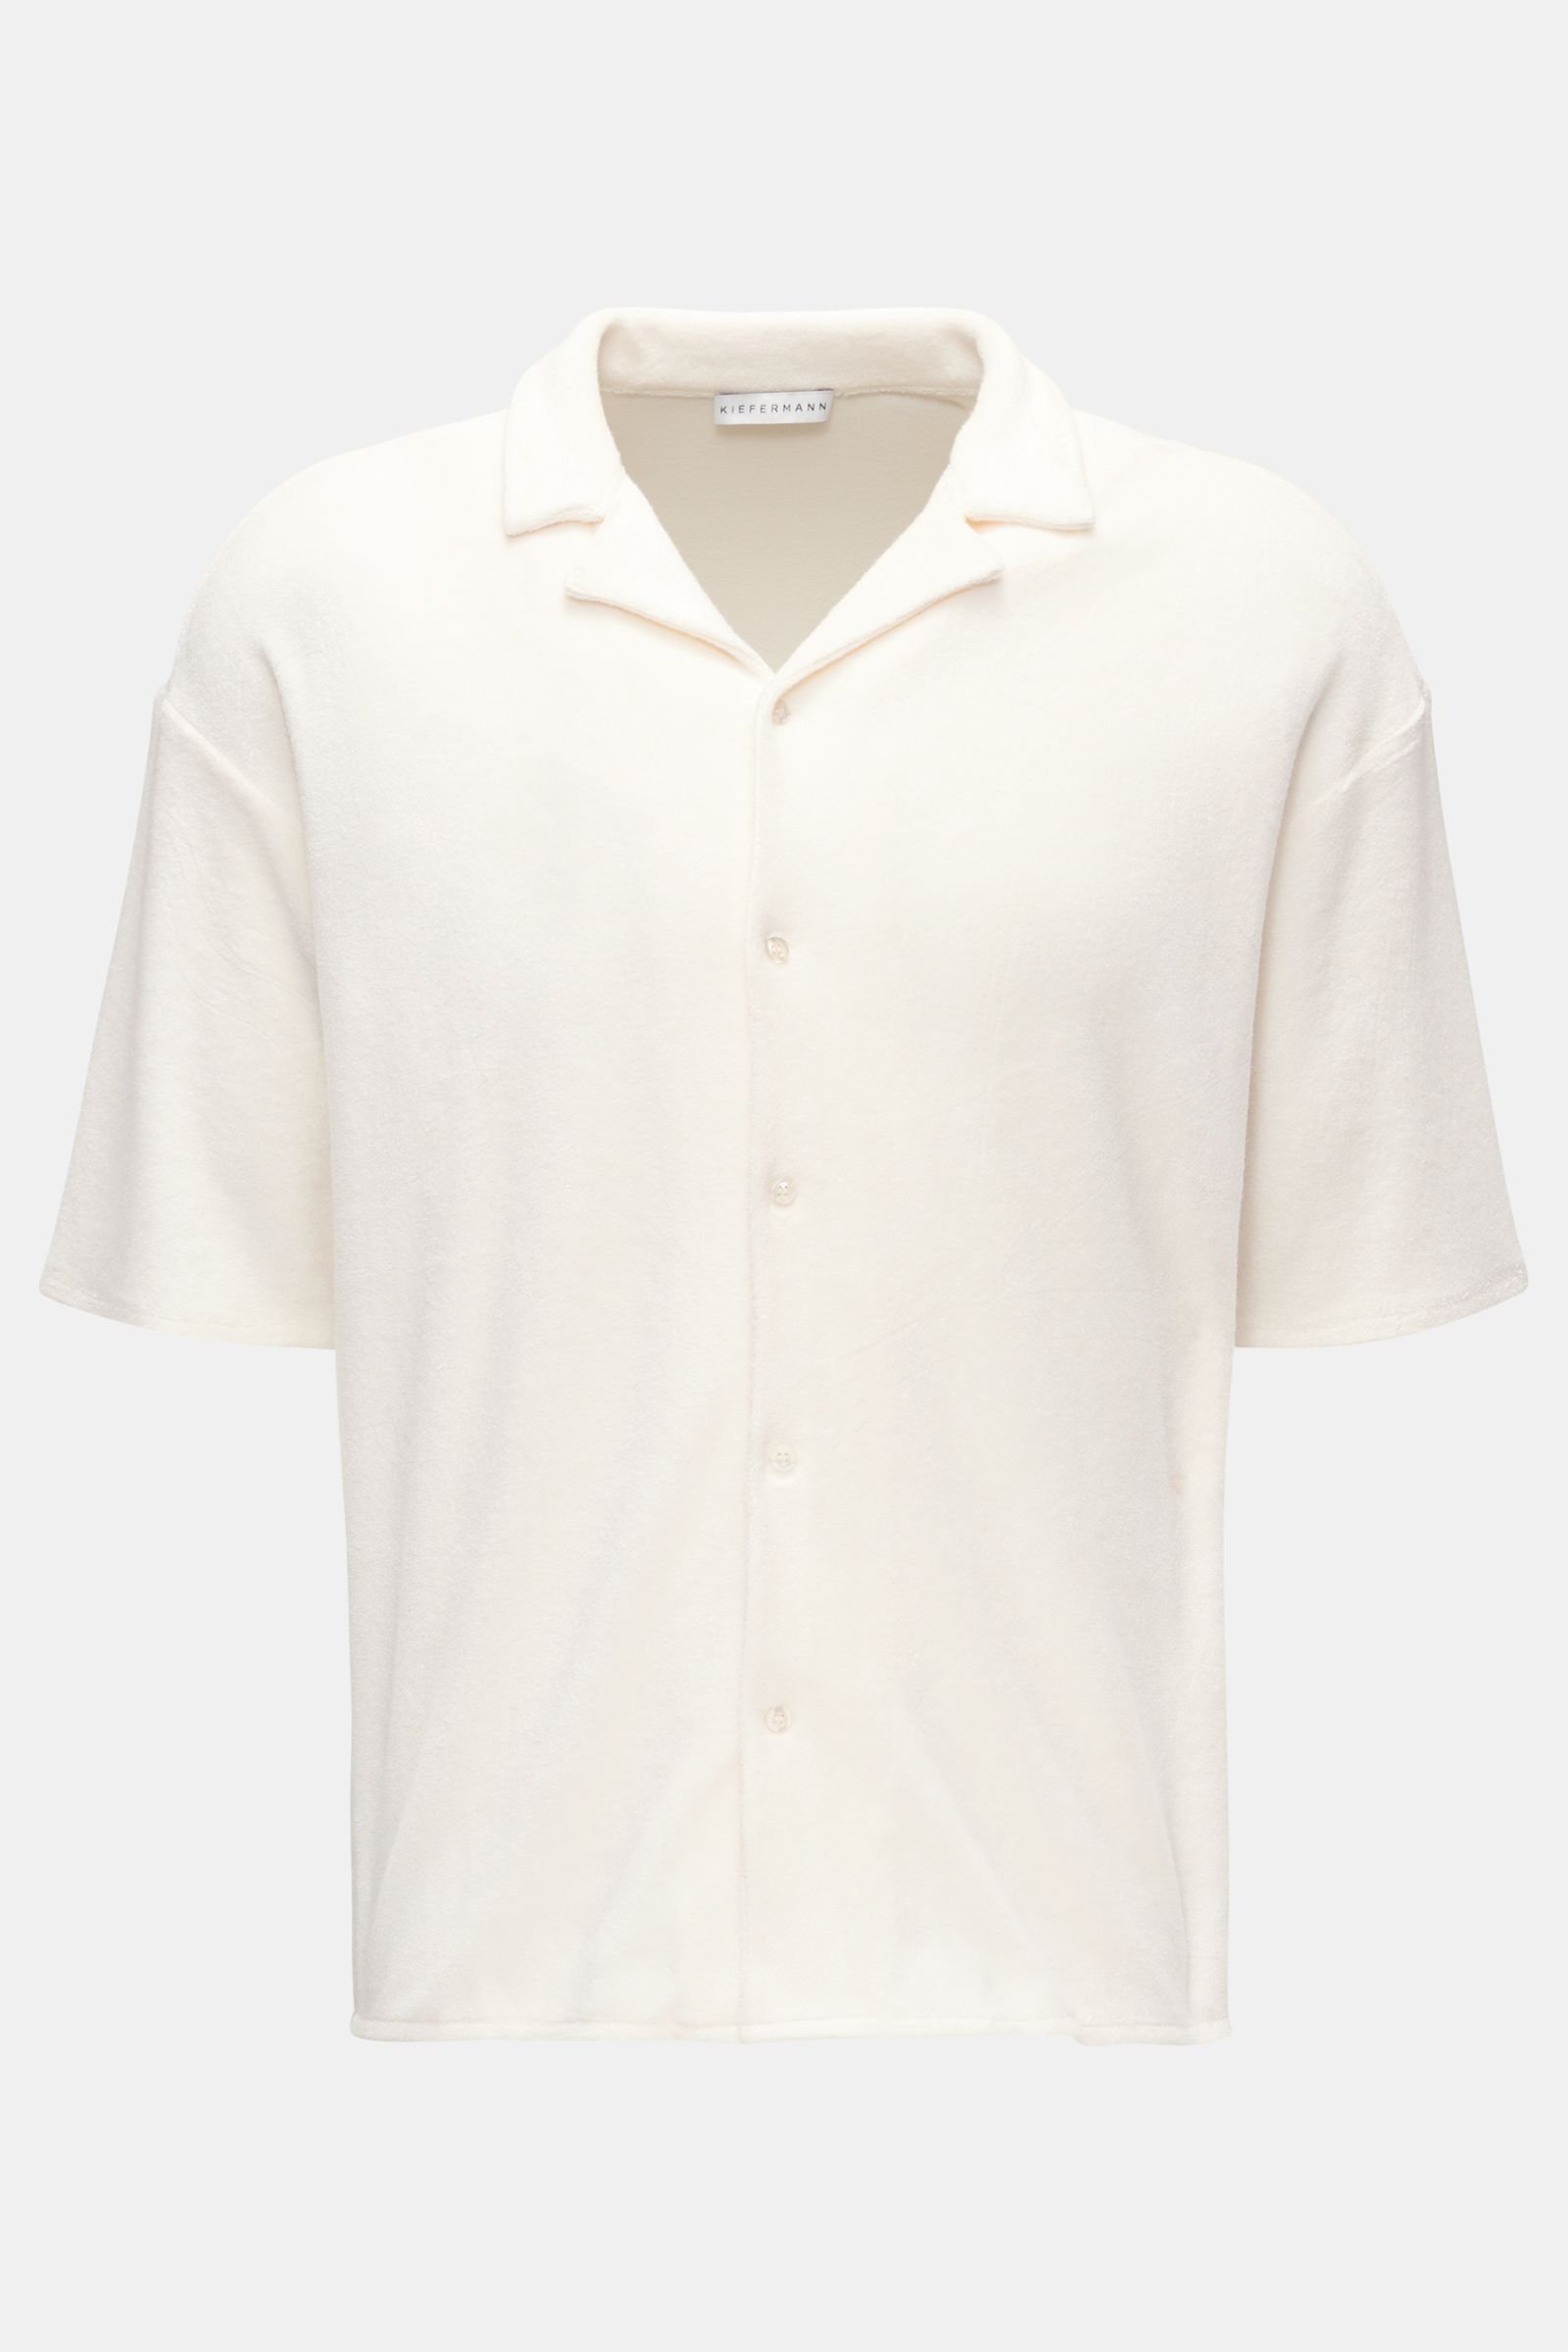 Terry short-sleeved shirt 'Thorgan' Cuban collar off-white